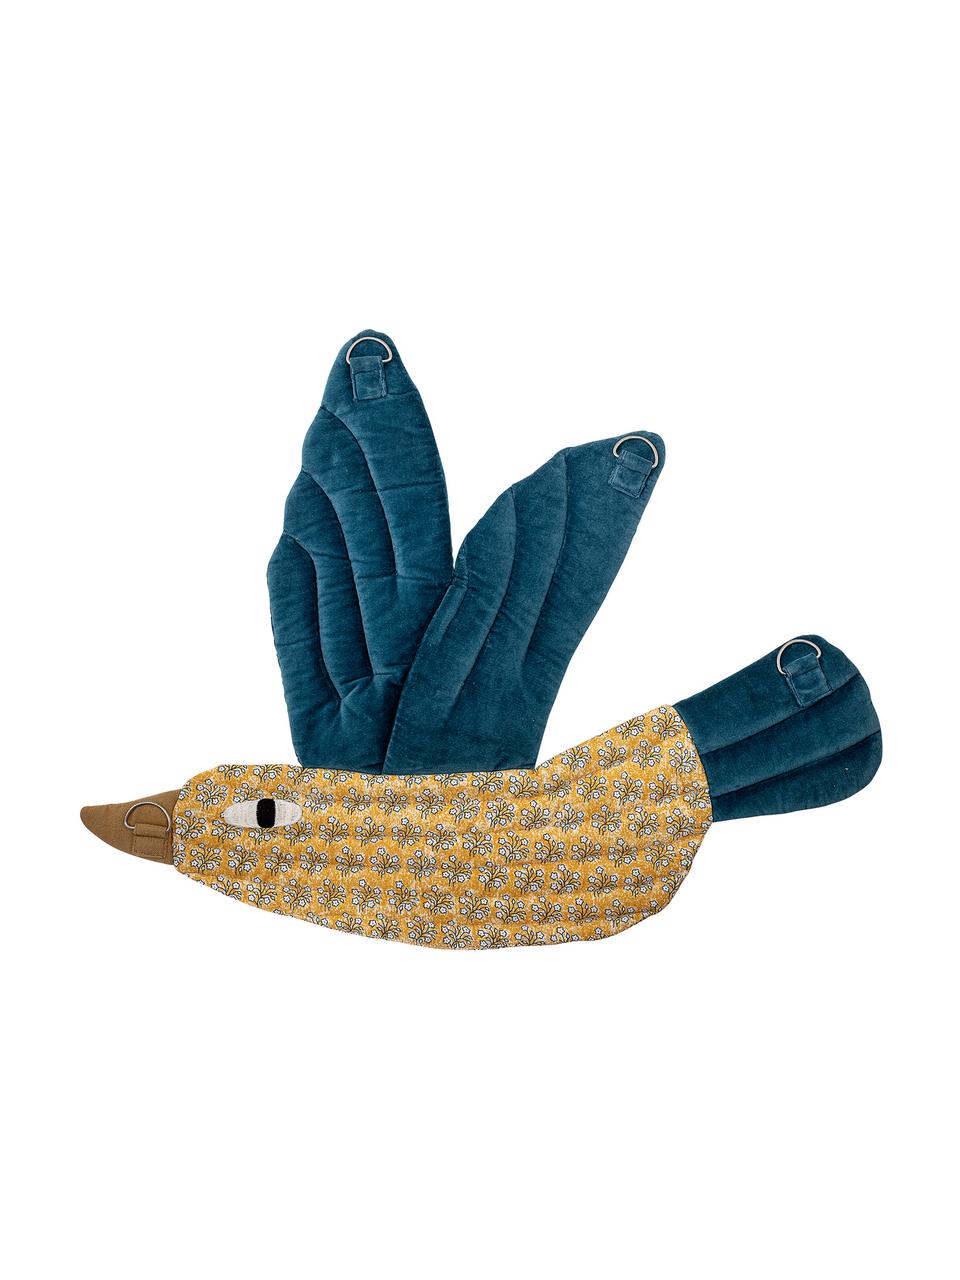 Wandobjekt Blue Bird, Bezug: Baumwolle, Gelb, Blau, Braun, Weiss, 62 x 52 cm